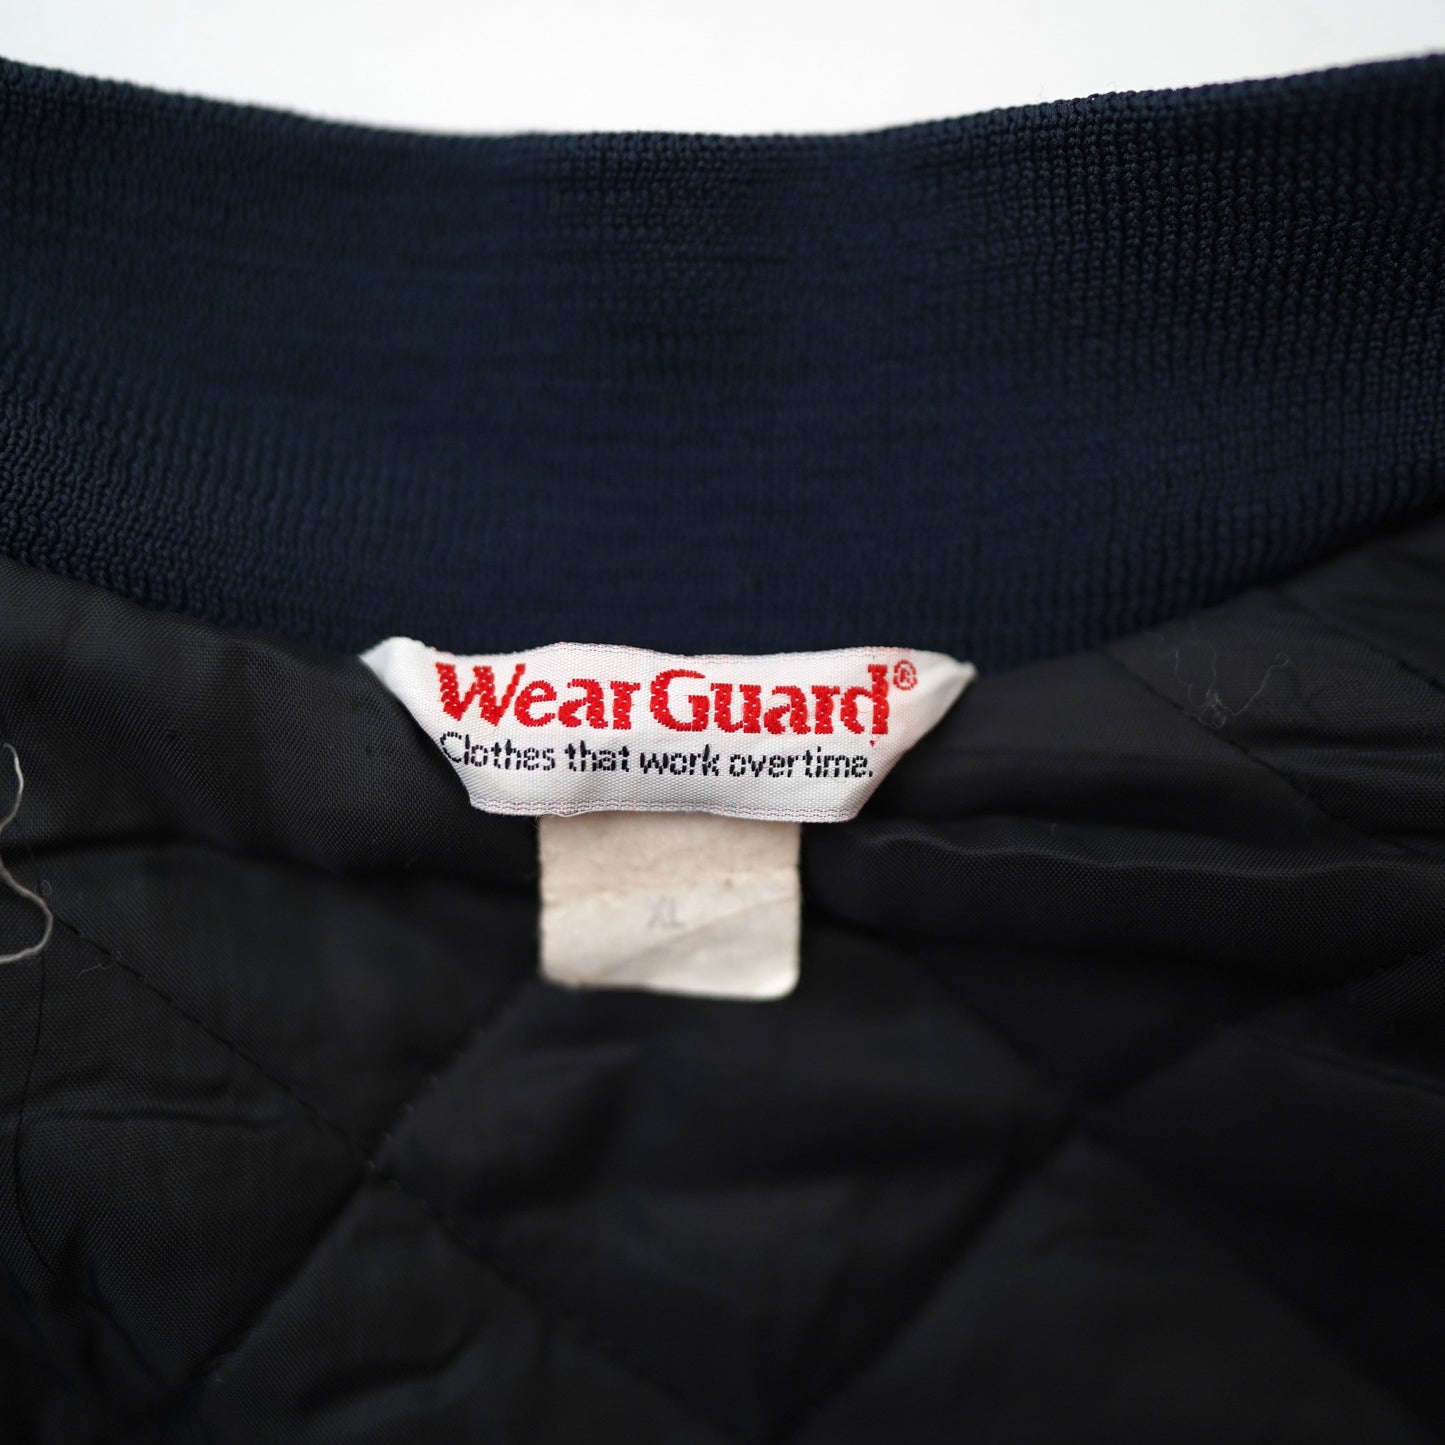 Wear Guard stagium jacket